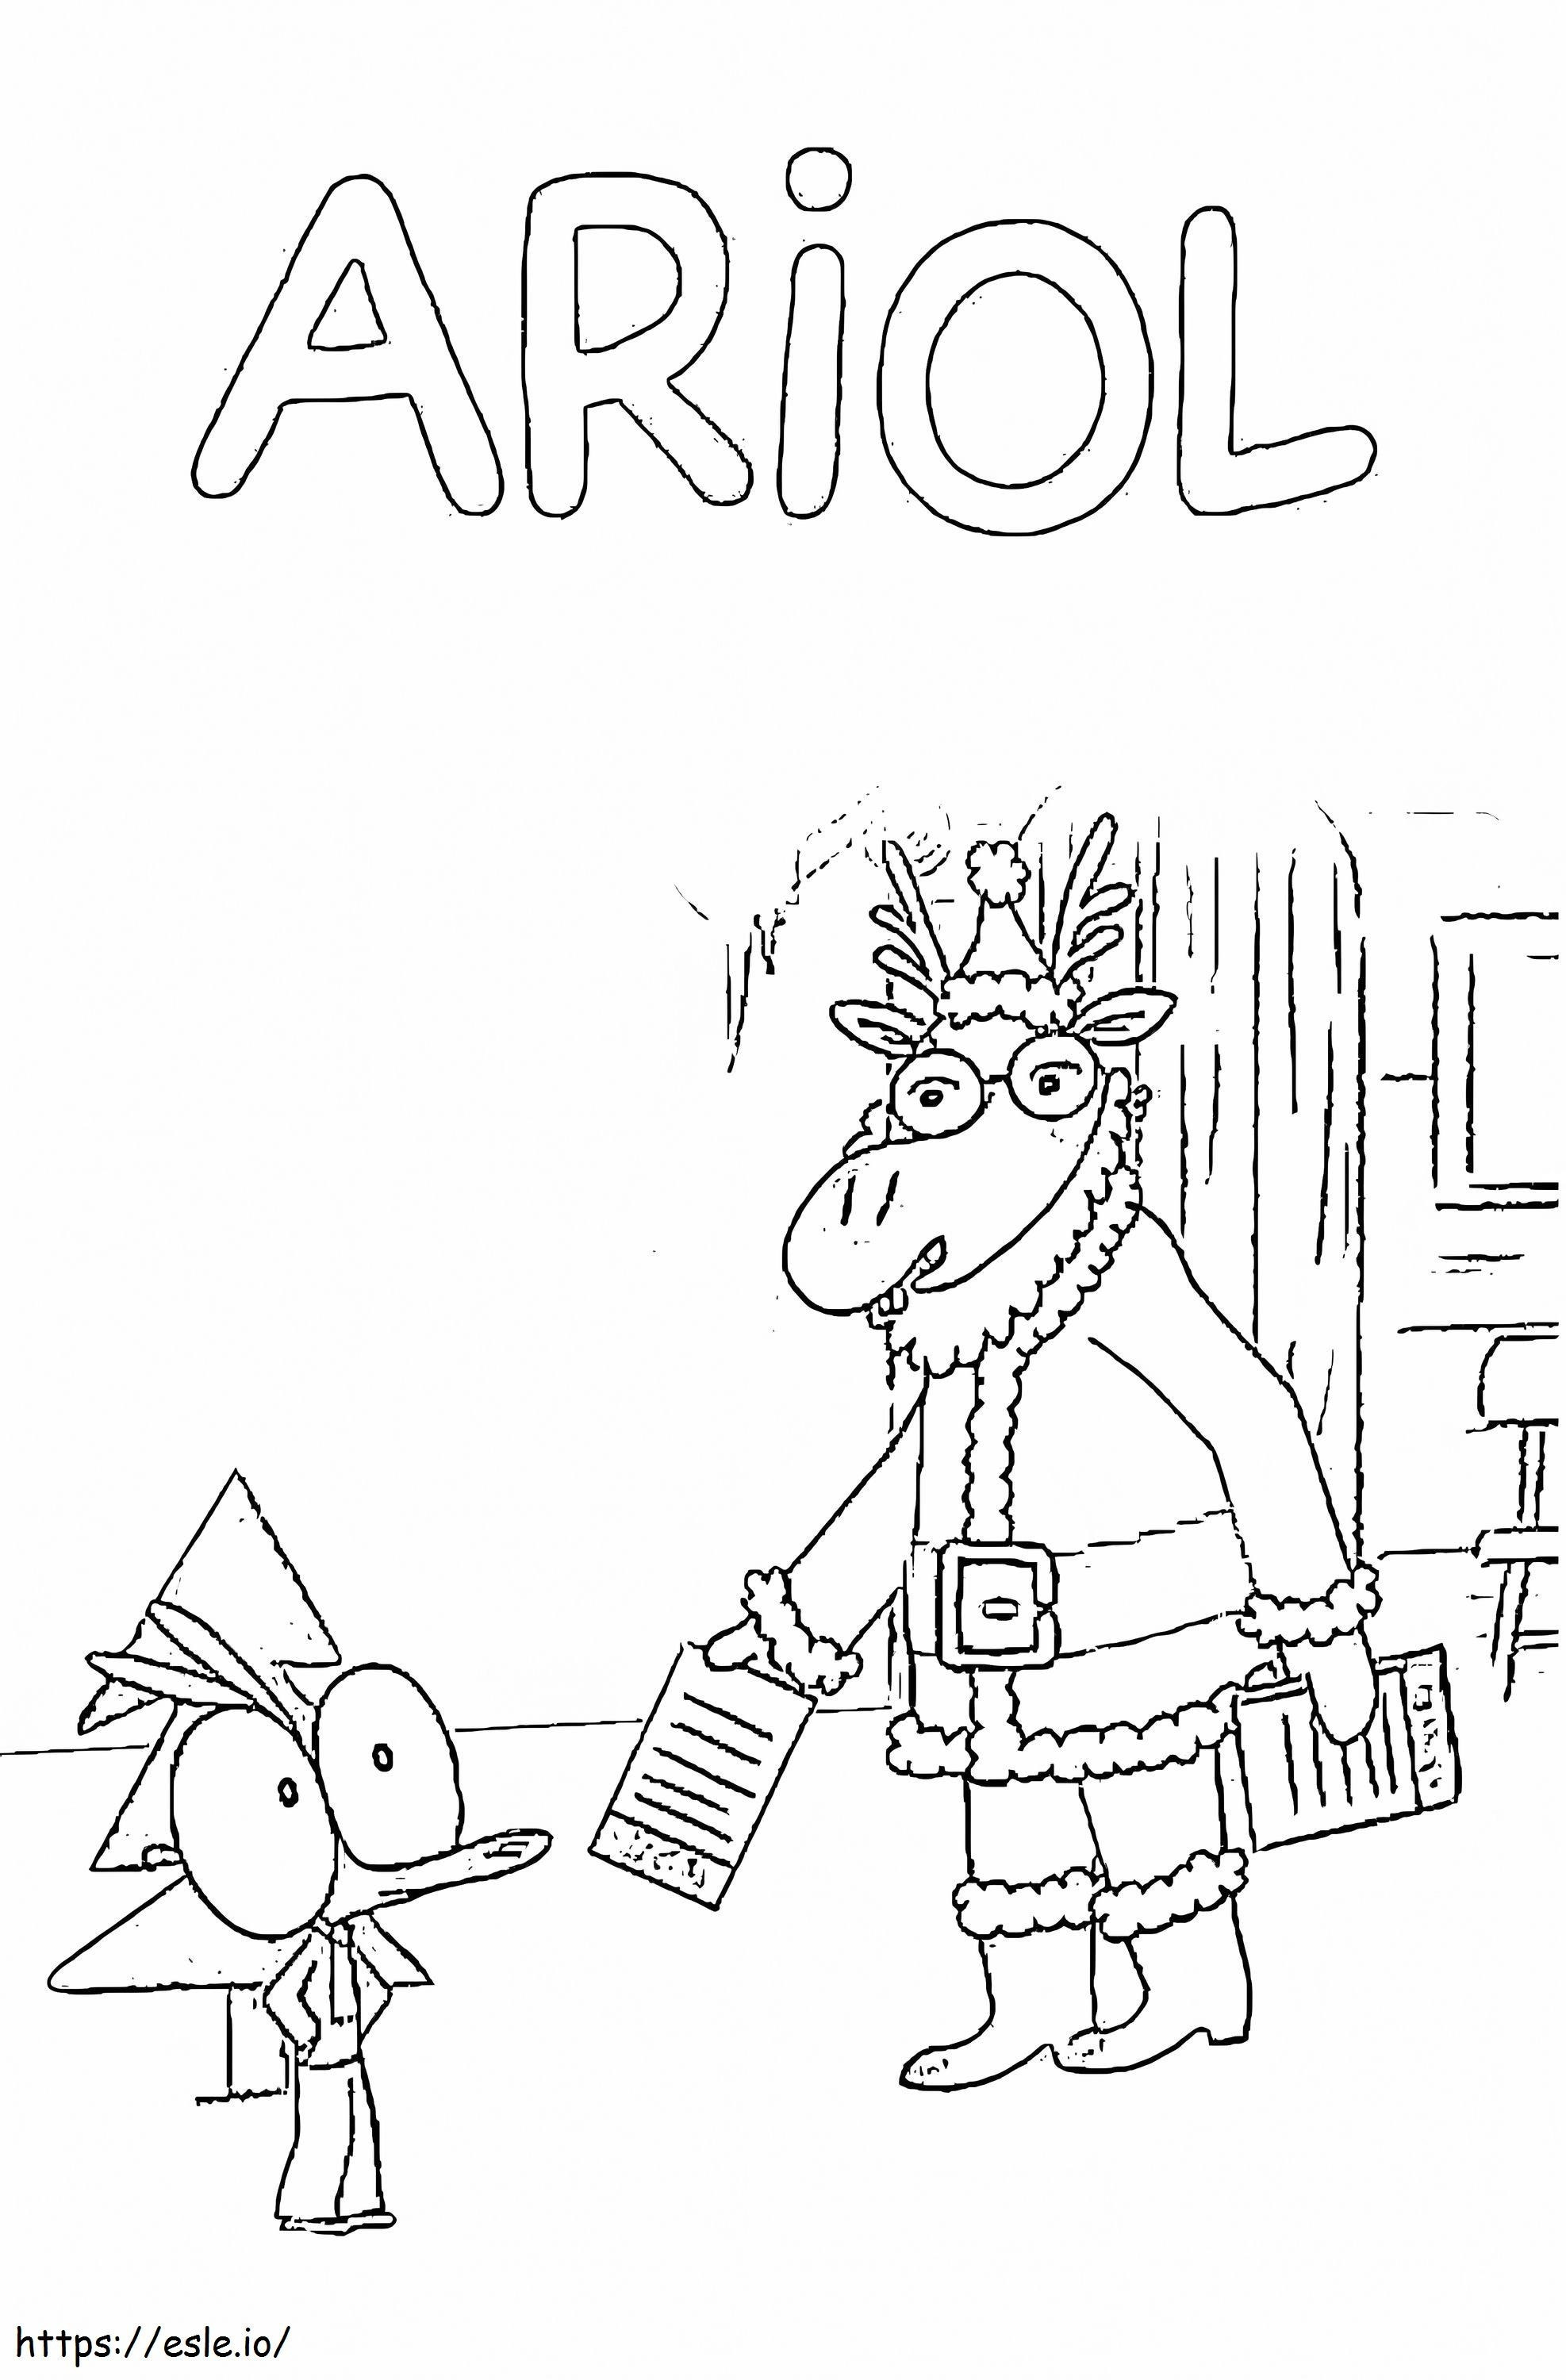 Ariol And Santa Claus coloring page